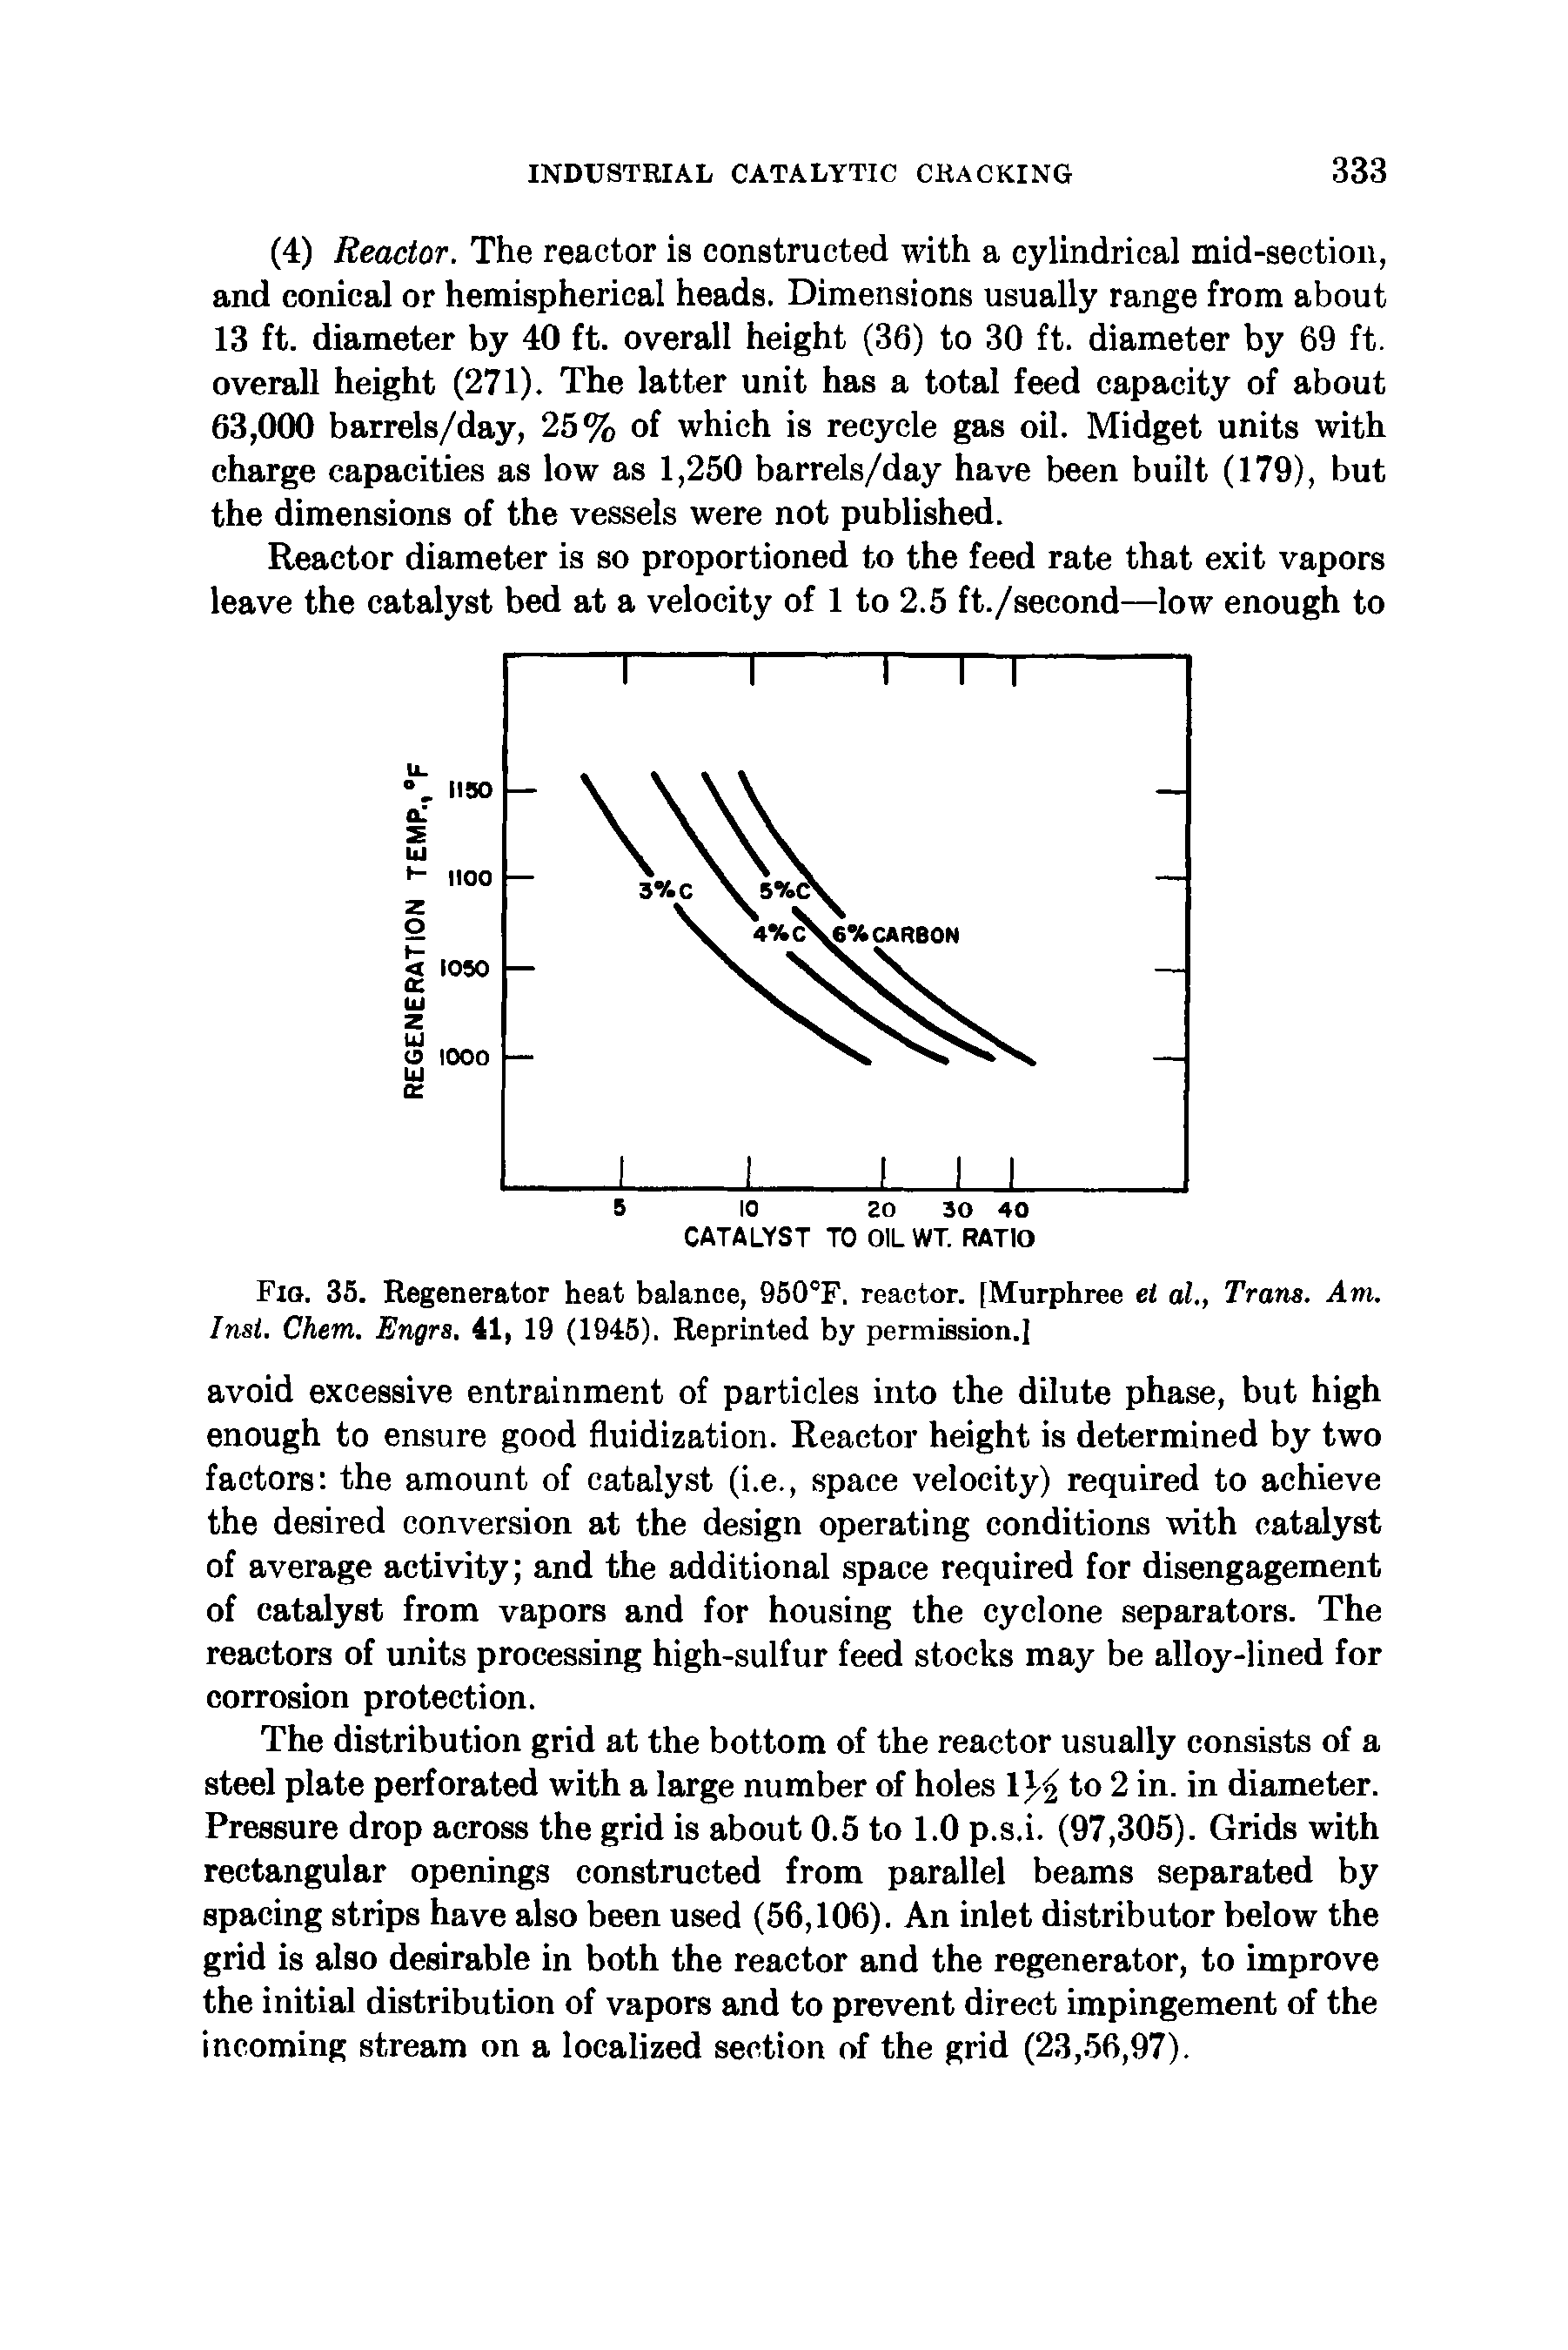 Fig. 35. Regenerator heat balance, 950°F. reactor. [Murphree el al., Trans. Am. Inst. Chem. Engra. 41, 19 (1945). Reprinted by permission.]...